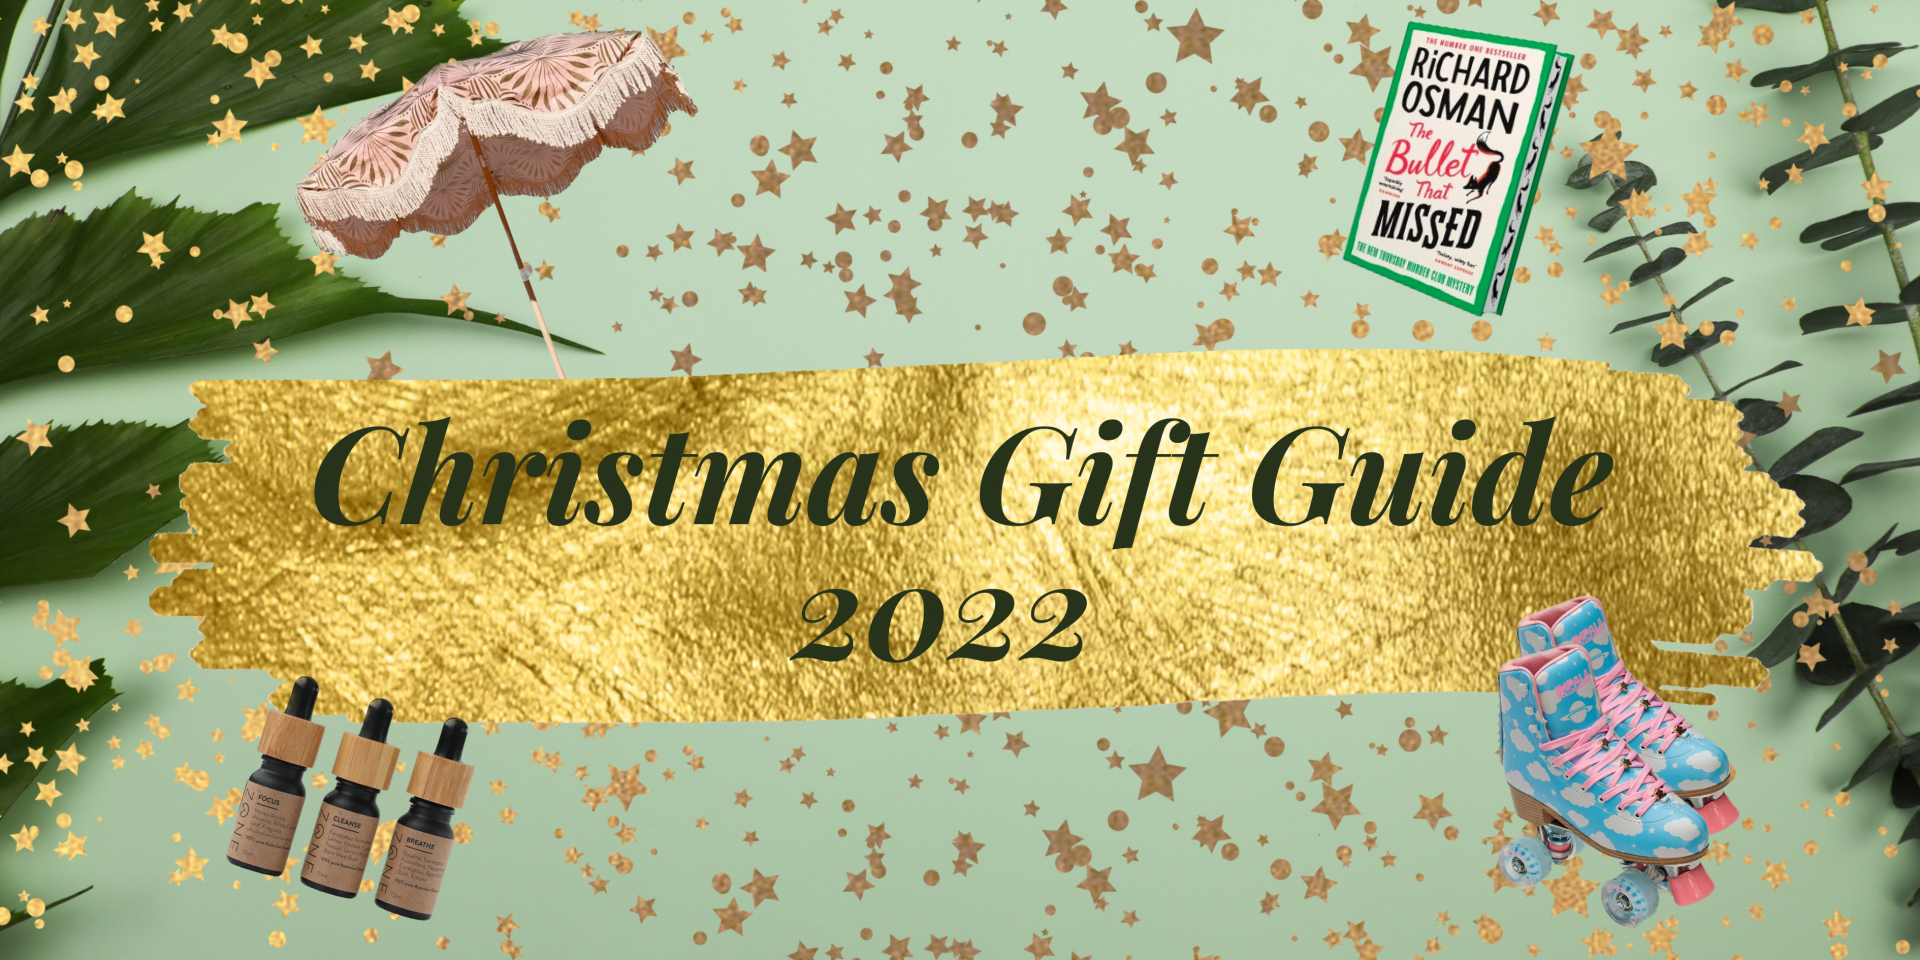 Shores Christmas Gift Guide 2022 Avalon Bilgola Newport Palm Beach Sydney